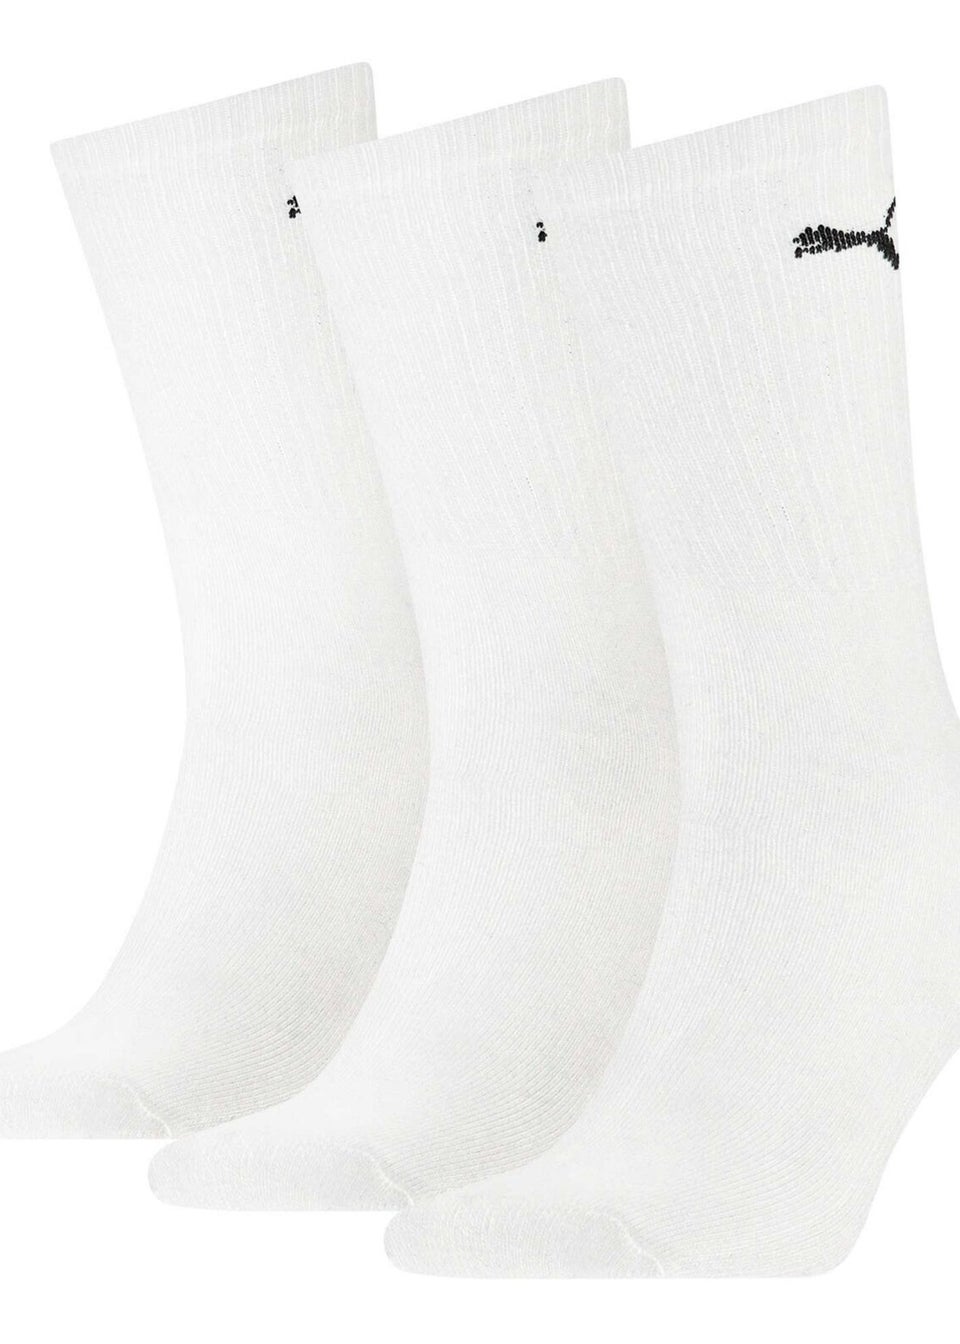 Puma White Crew Sports Socks (Pack of 3)